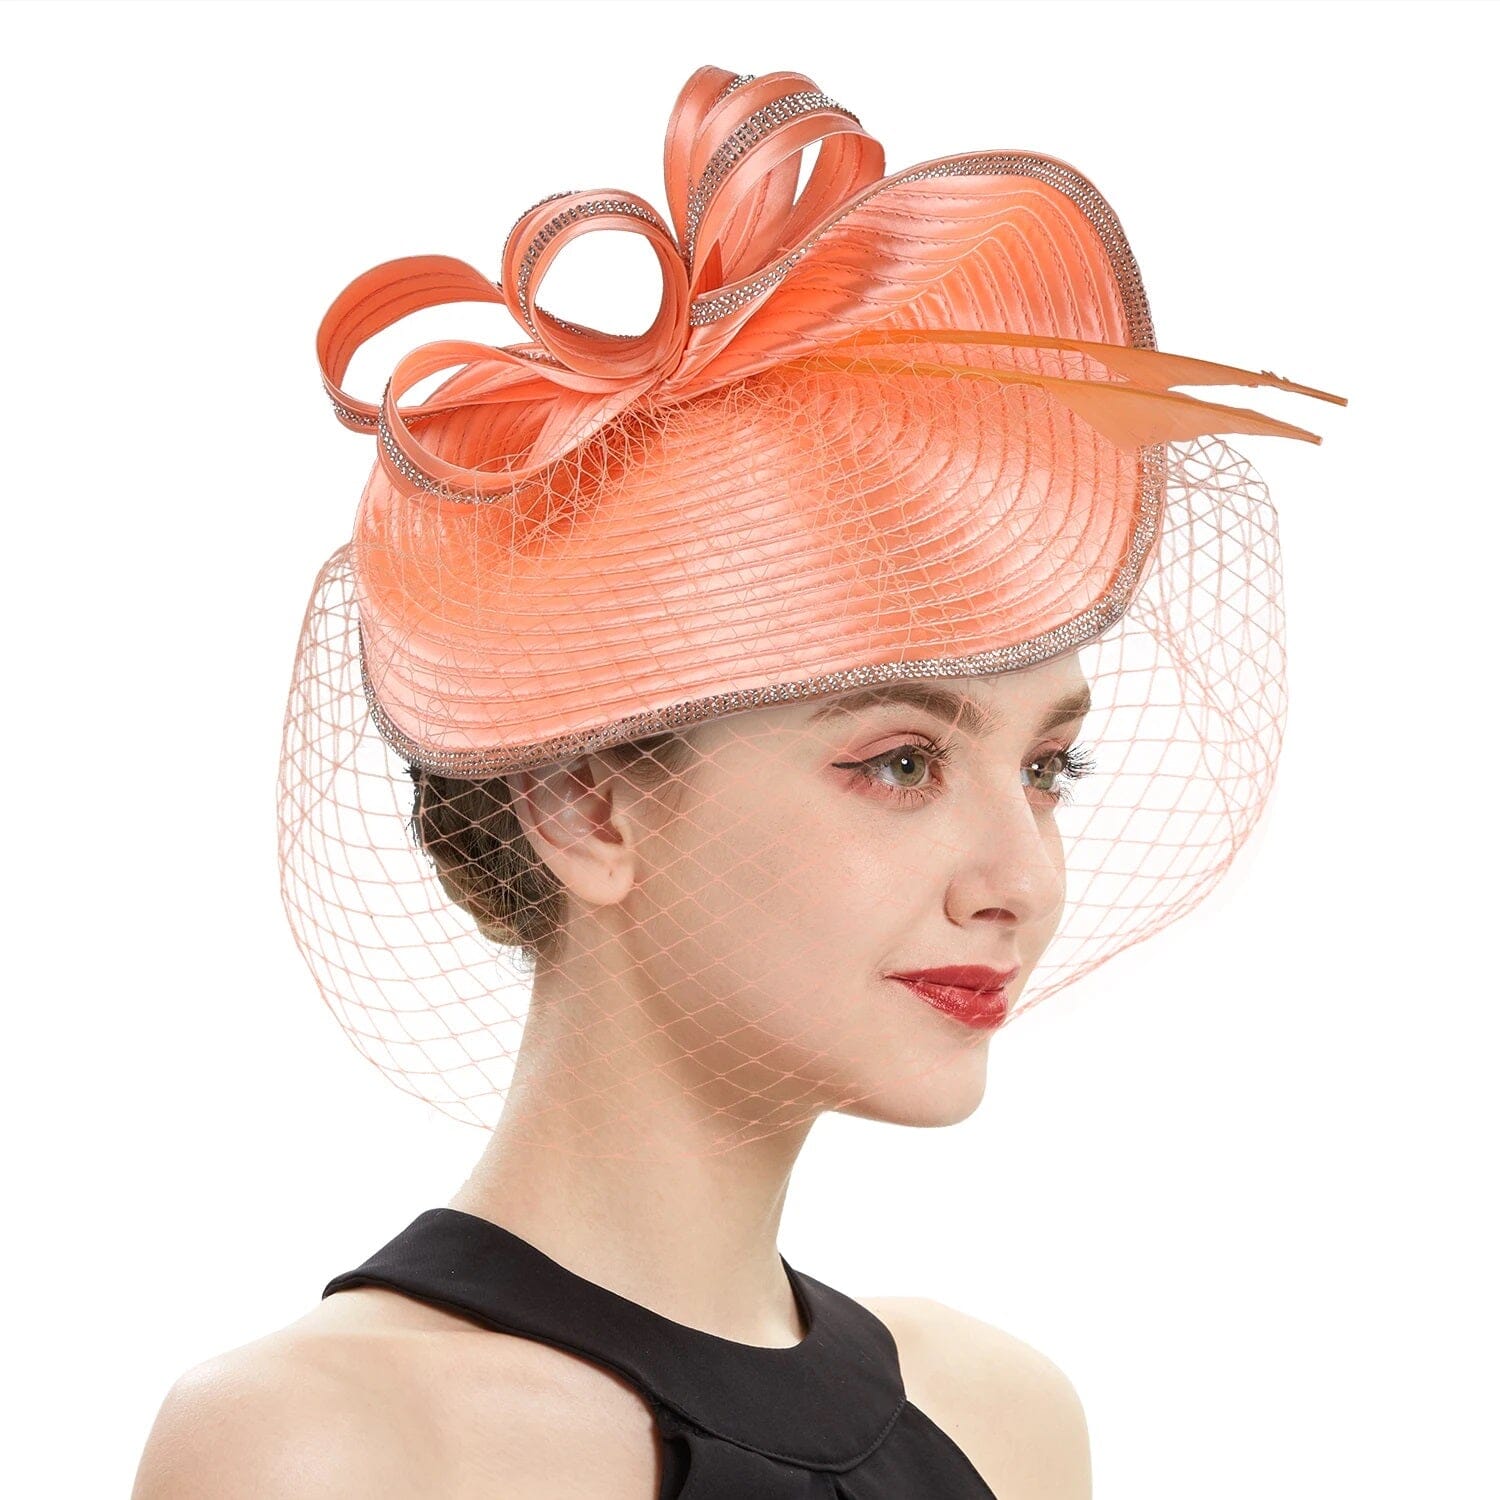 Women Diamond-studded Luxurious Banquet Wedding Dance Party Feather Headwear Fascinator Veil Hat Hat jehouze 9-peach 